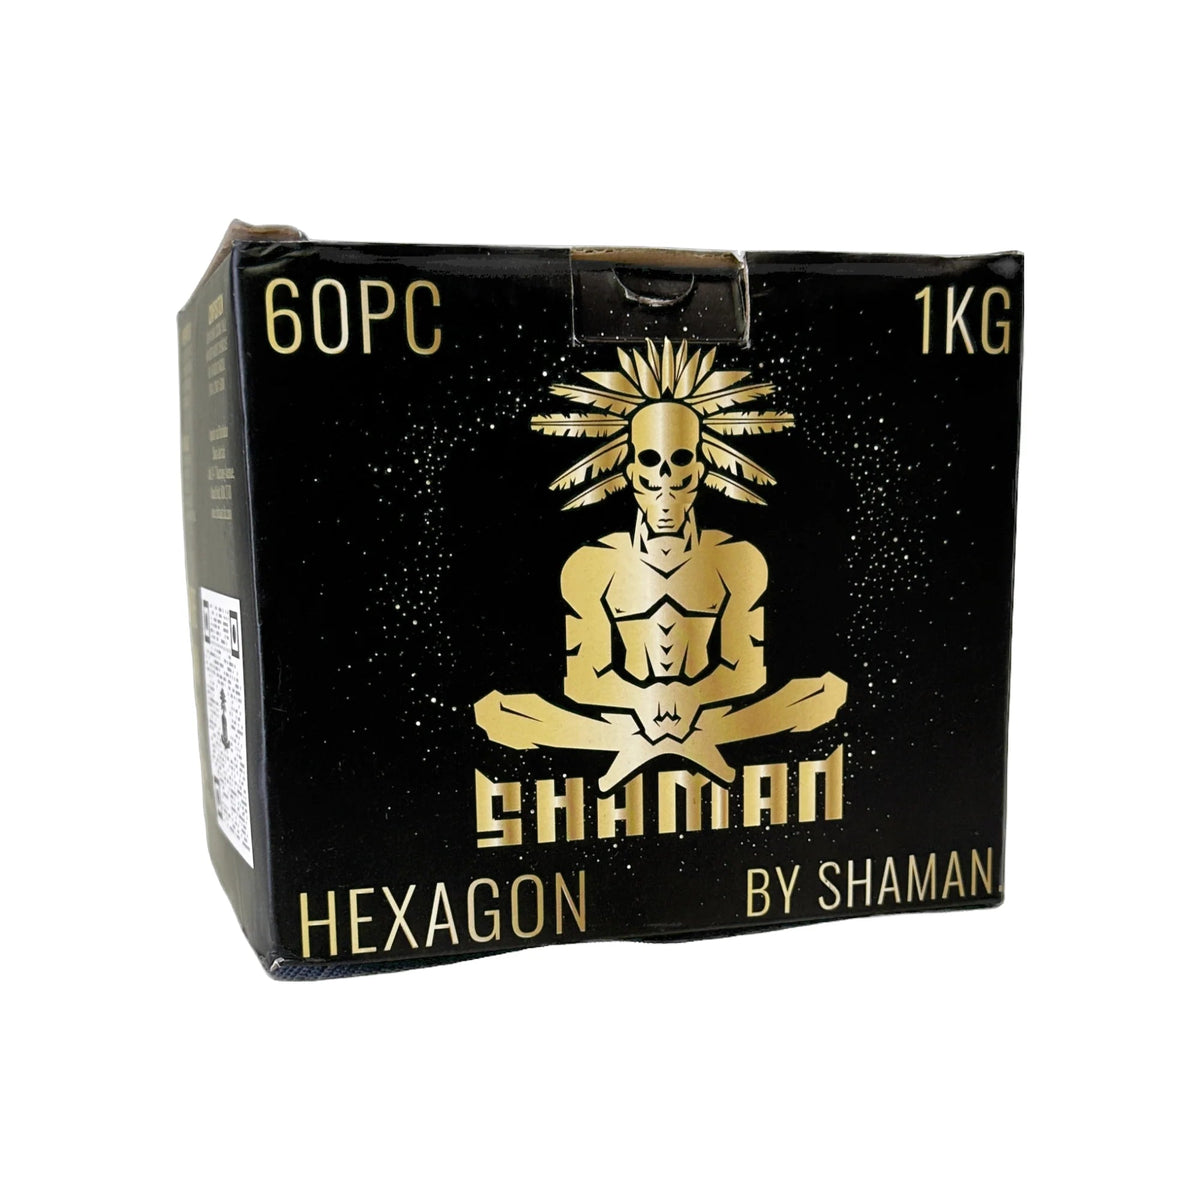 Shaman Coal Hexagon 1kg - Shaman